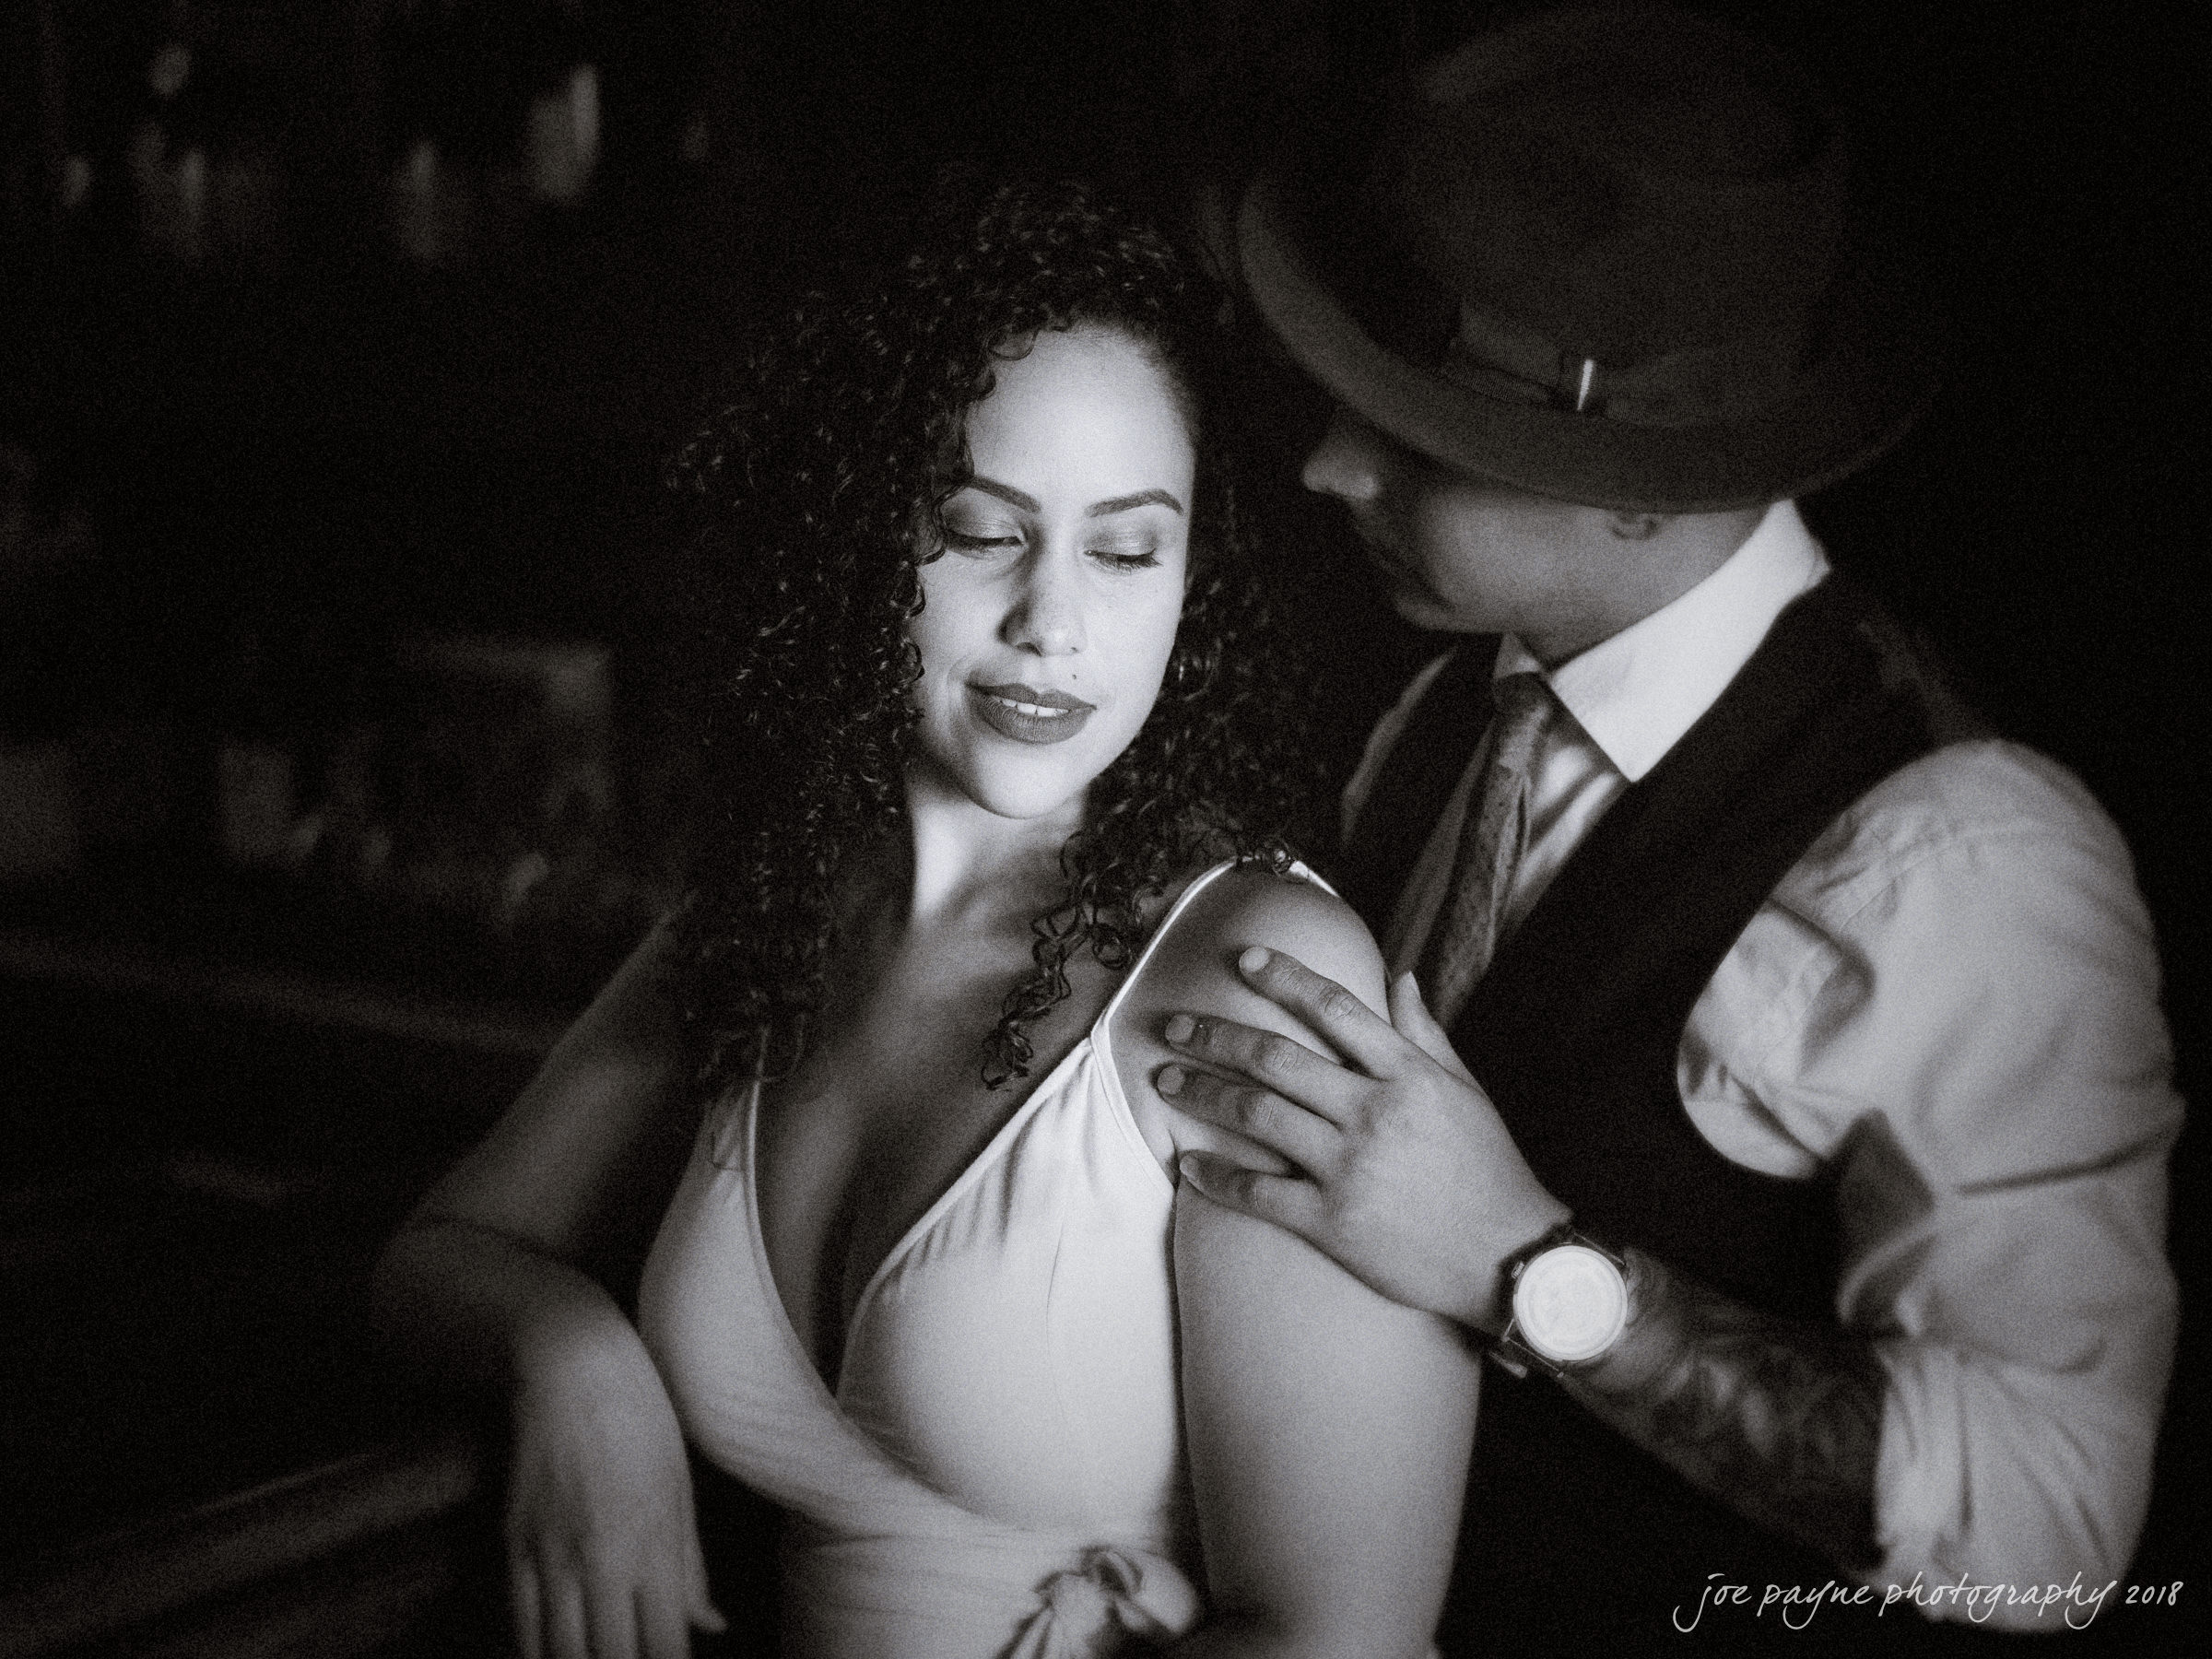 downtown durham engagement photography – melanie & anthony